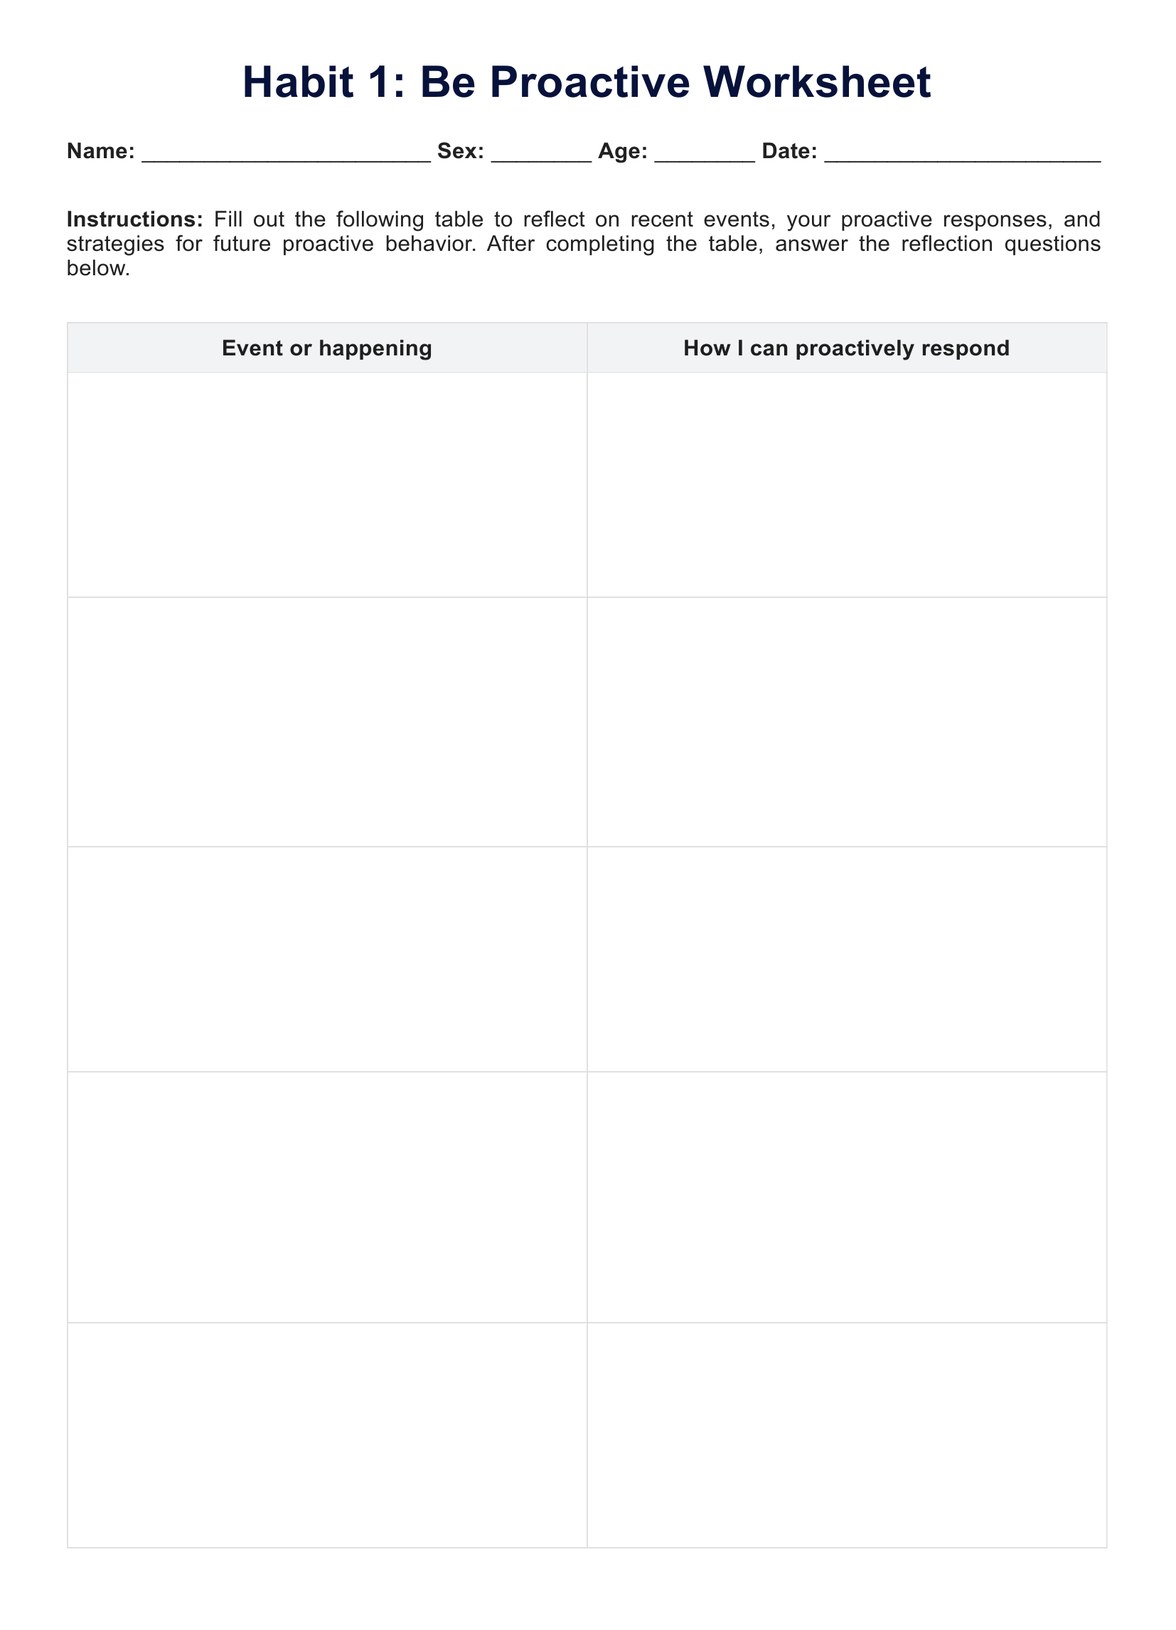 Habit 1: Be Proactive Worksheet PDF Example